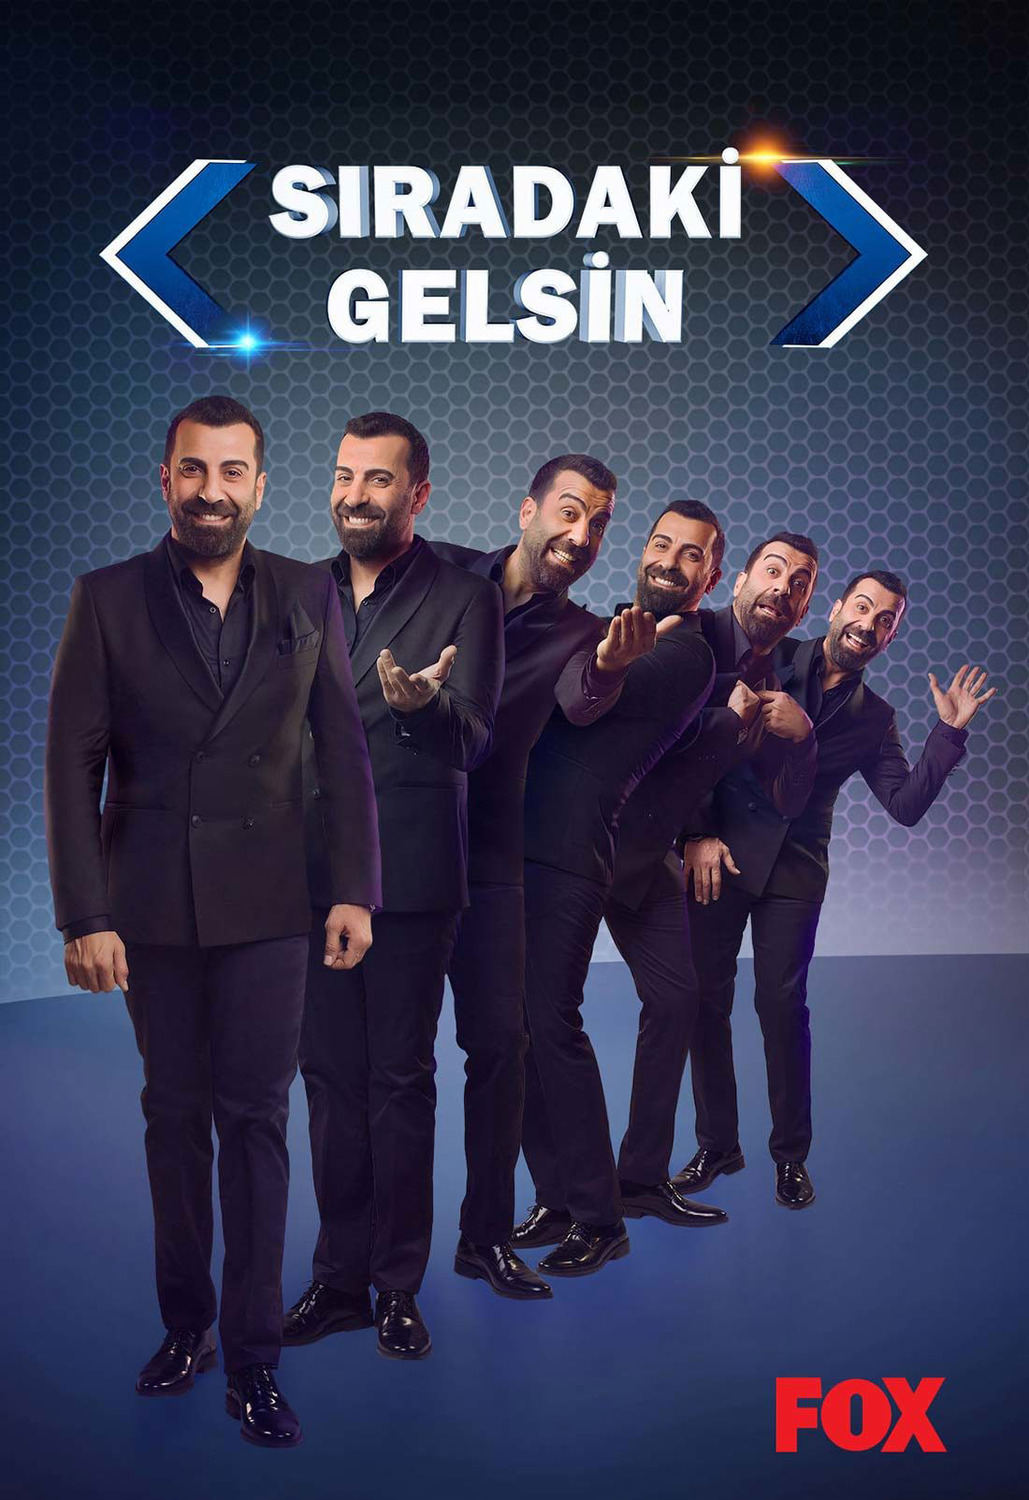 Extra Large TV Poster Image for Siradaki Gelsin 